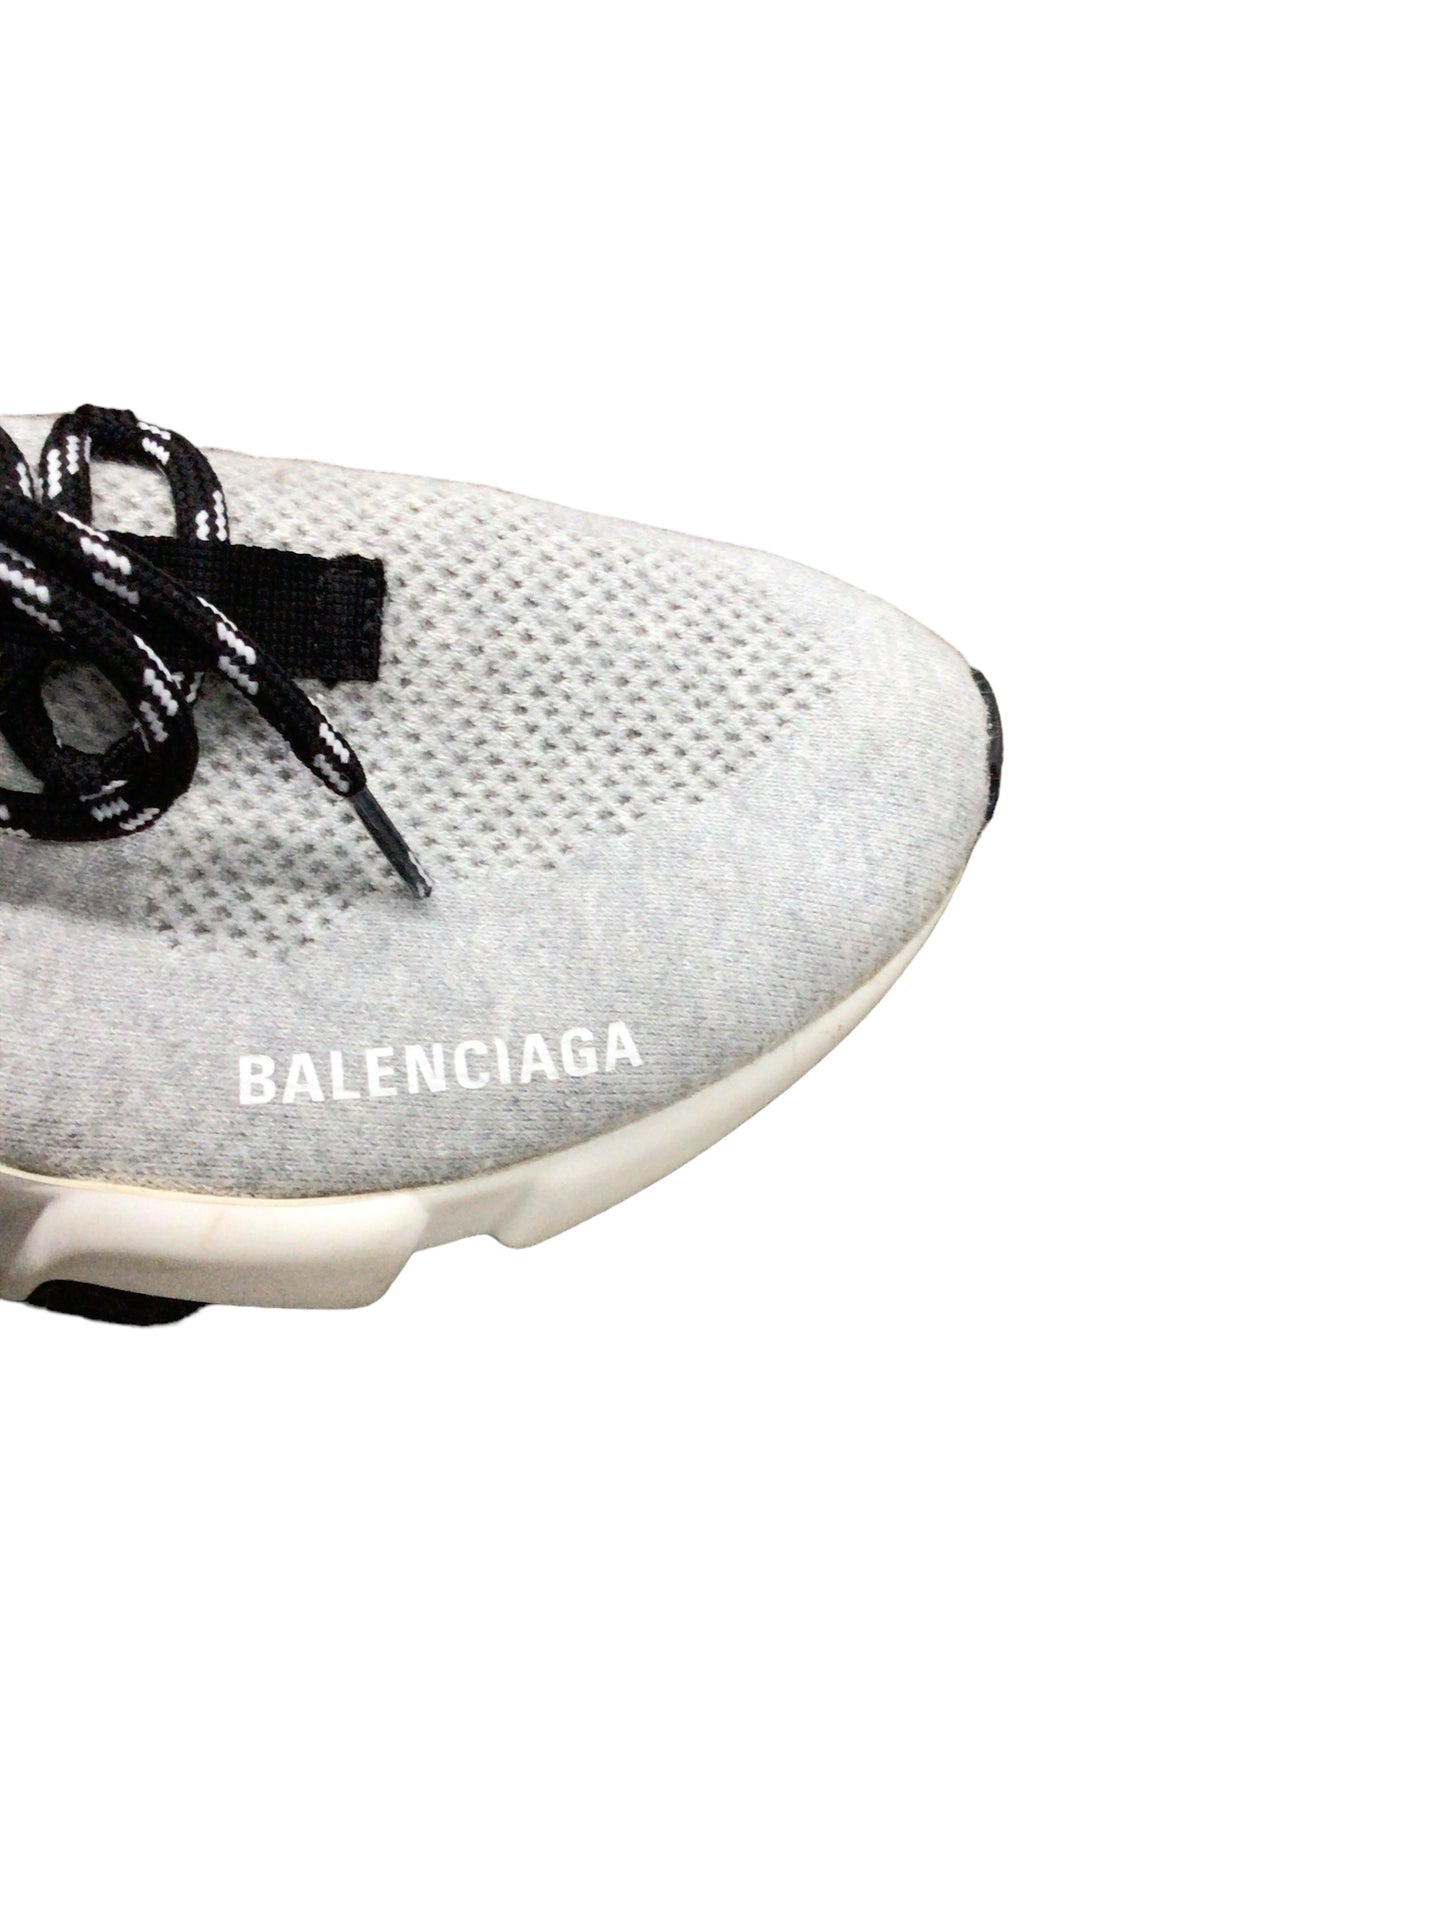 Shoes Luxury Designer By Balenciaga  Size: 9